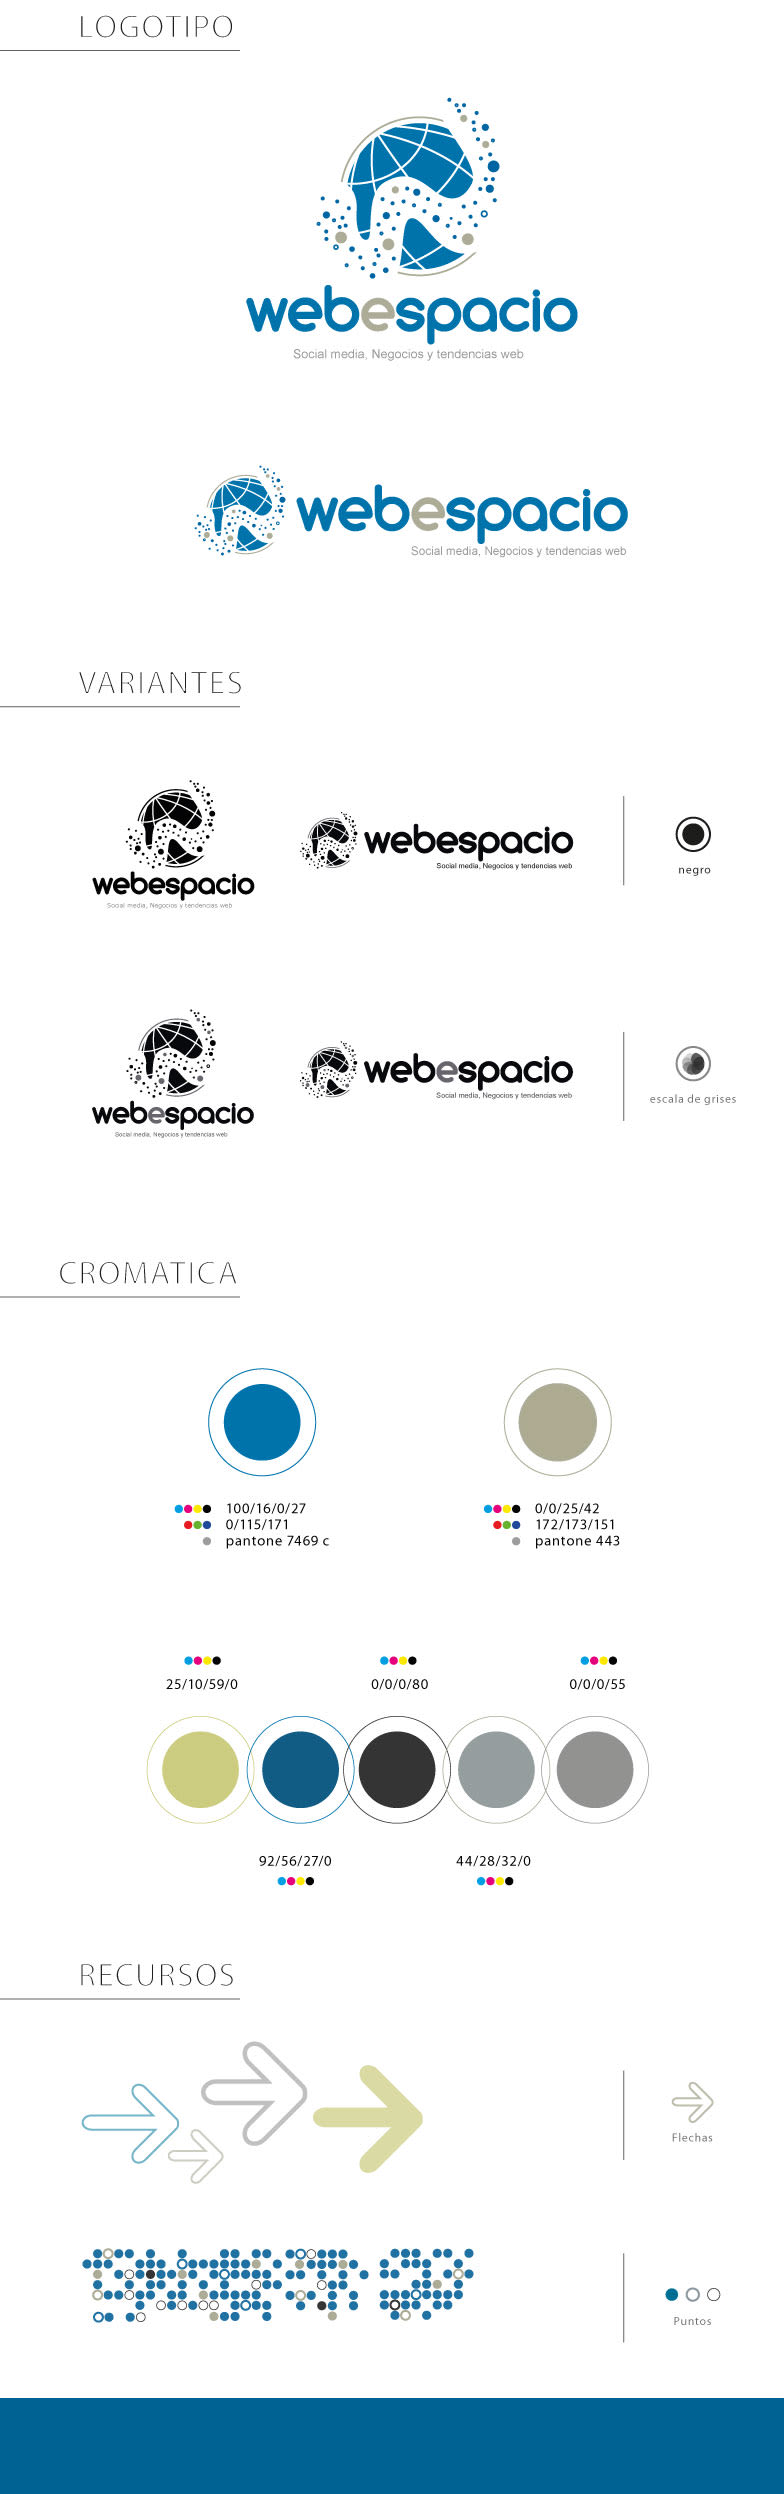 Webespacio Brand 1